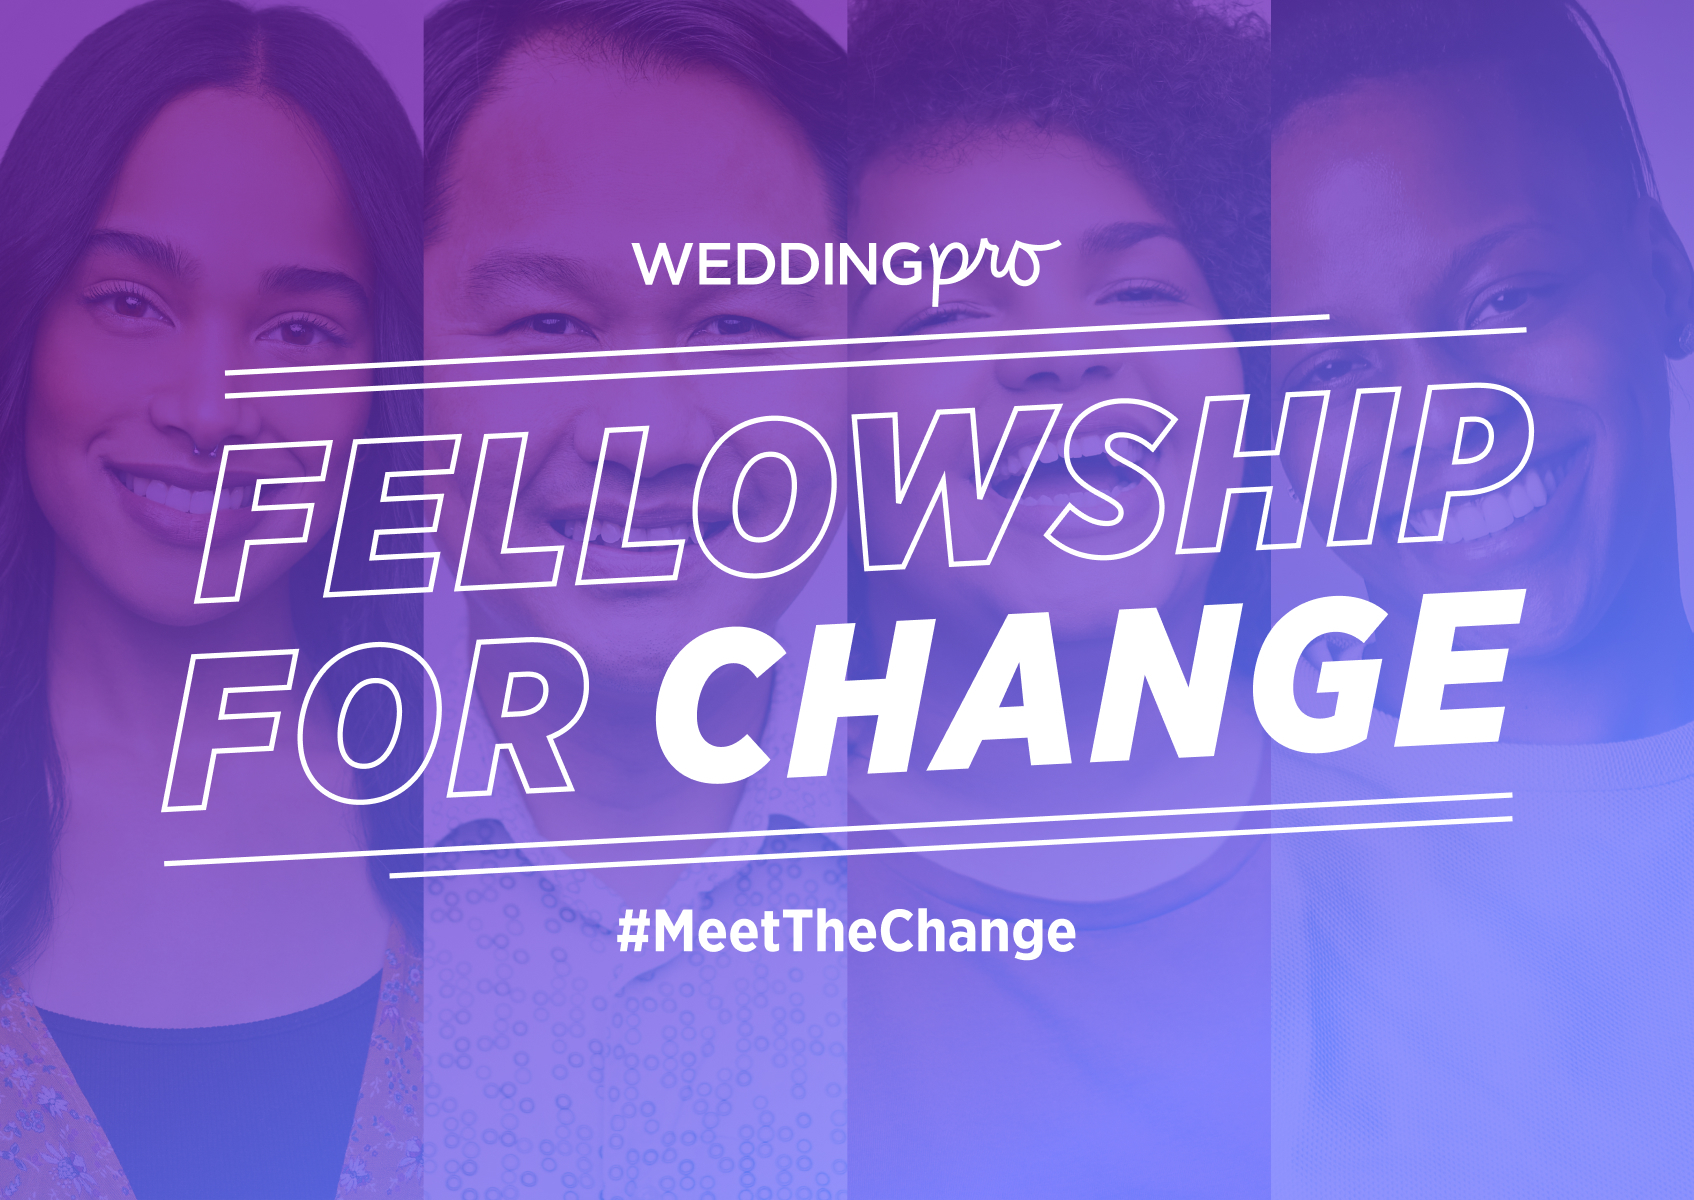 Fellowship for Change Banner